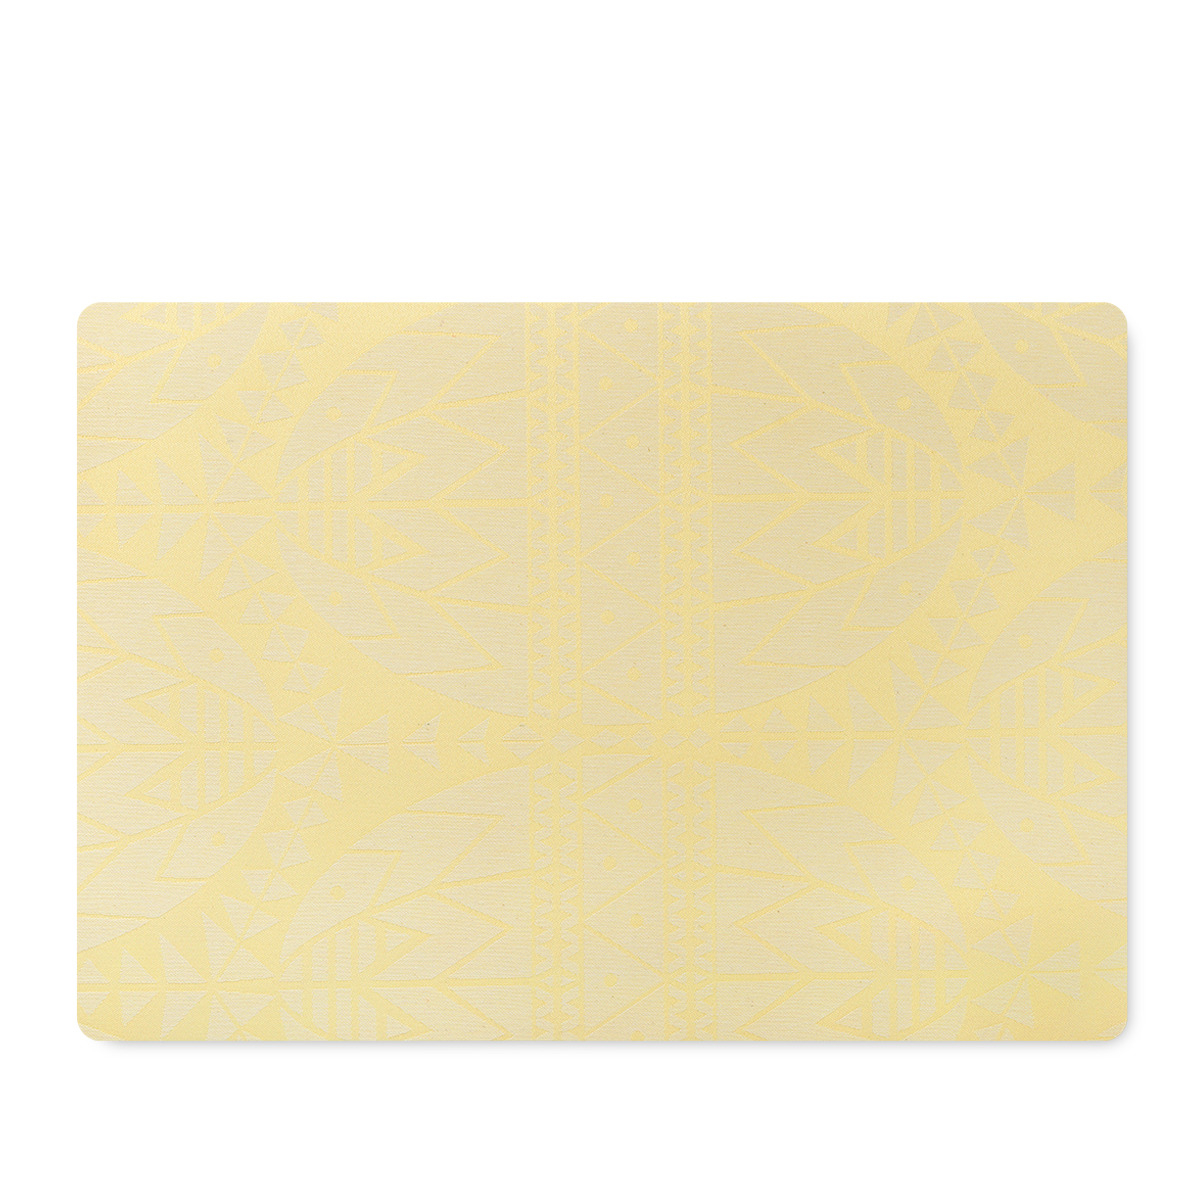 Påske Dækkeserviet gul 43x30 cm*